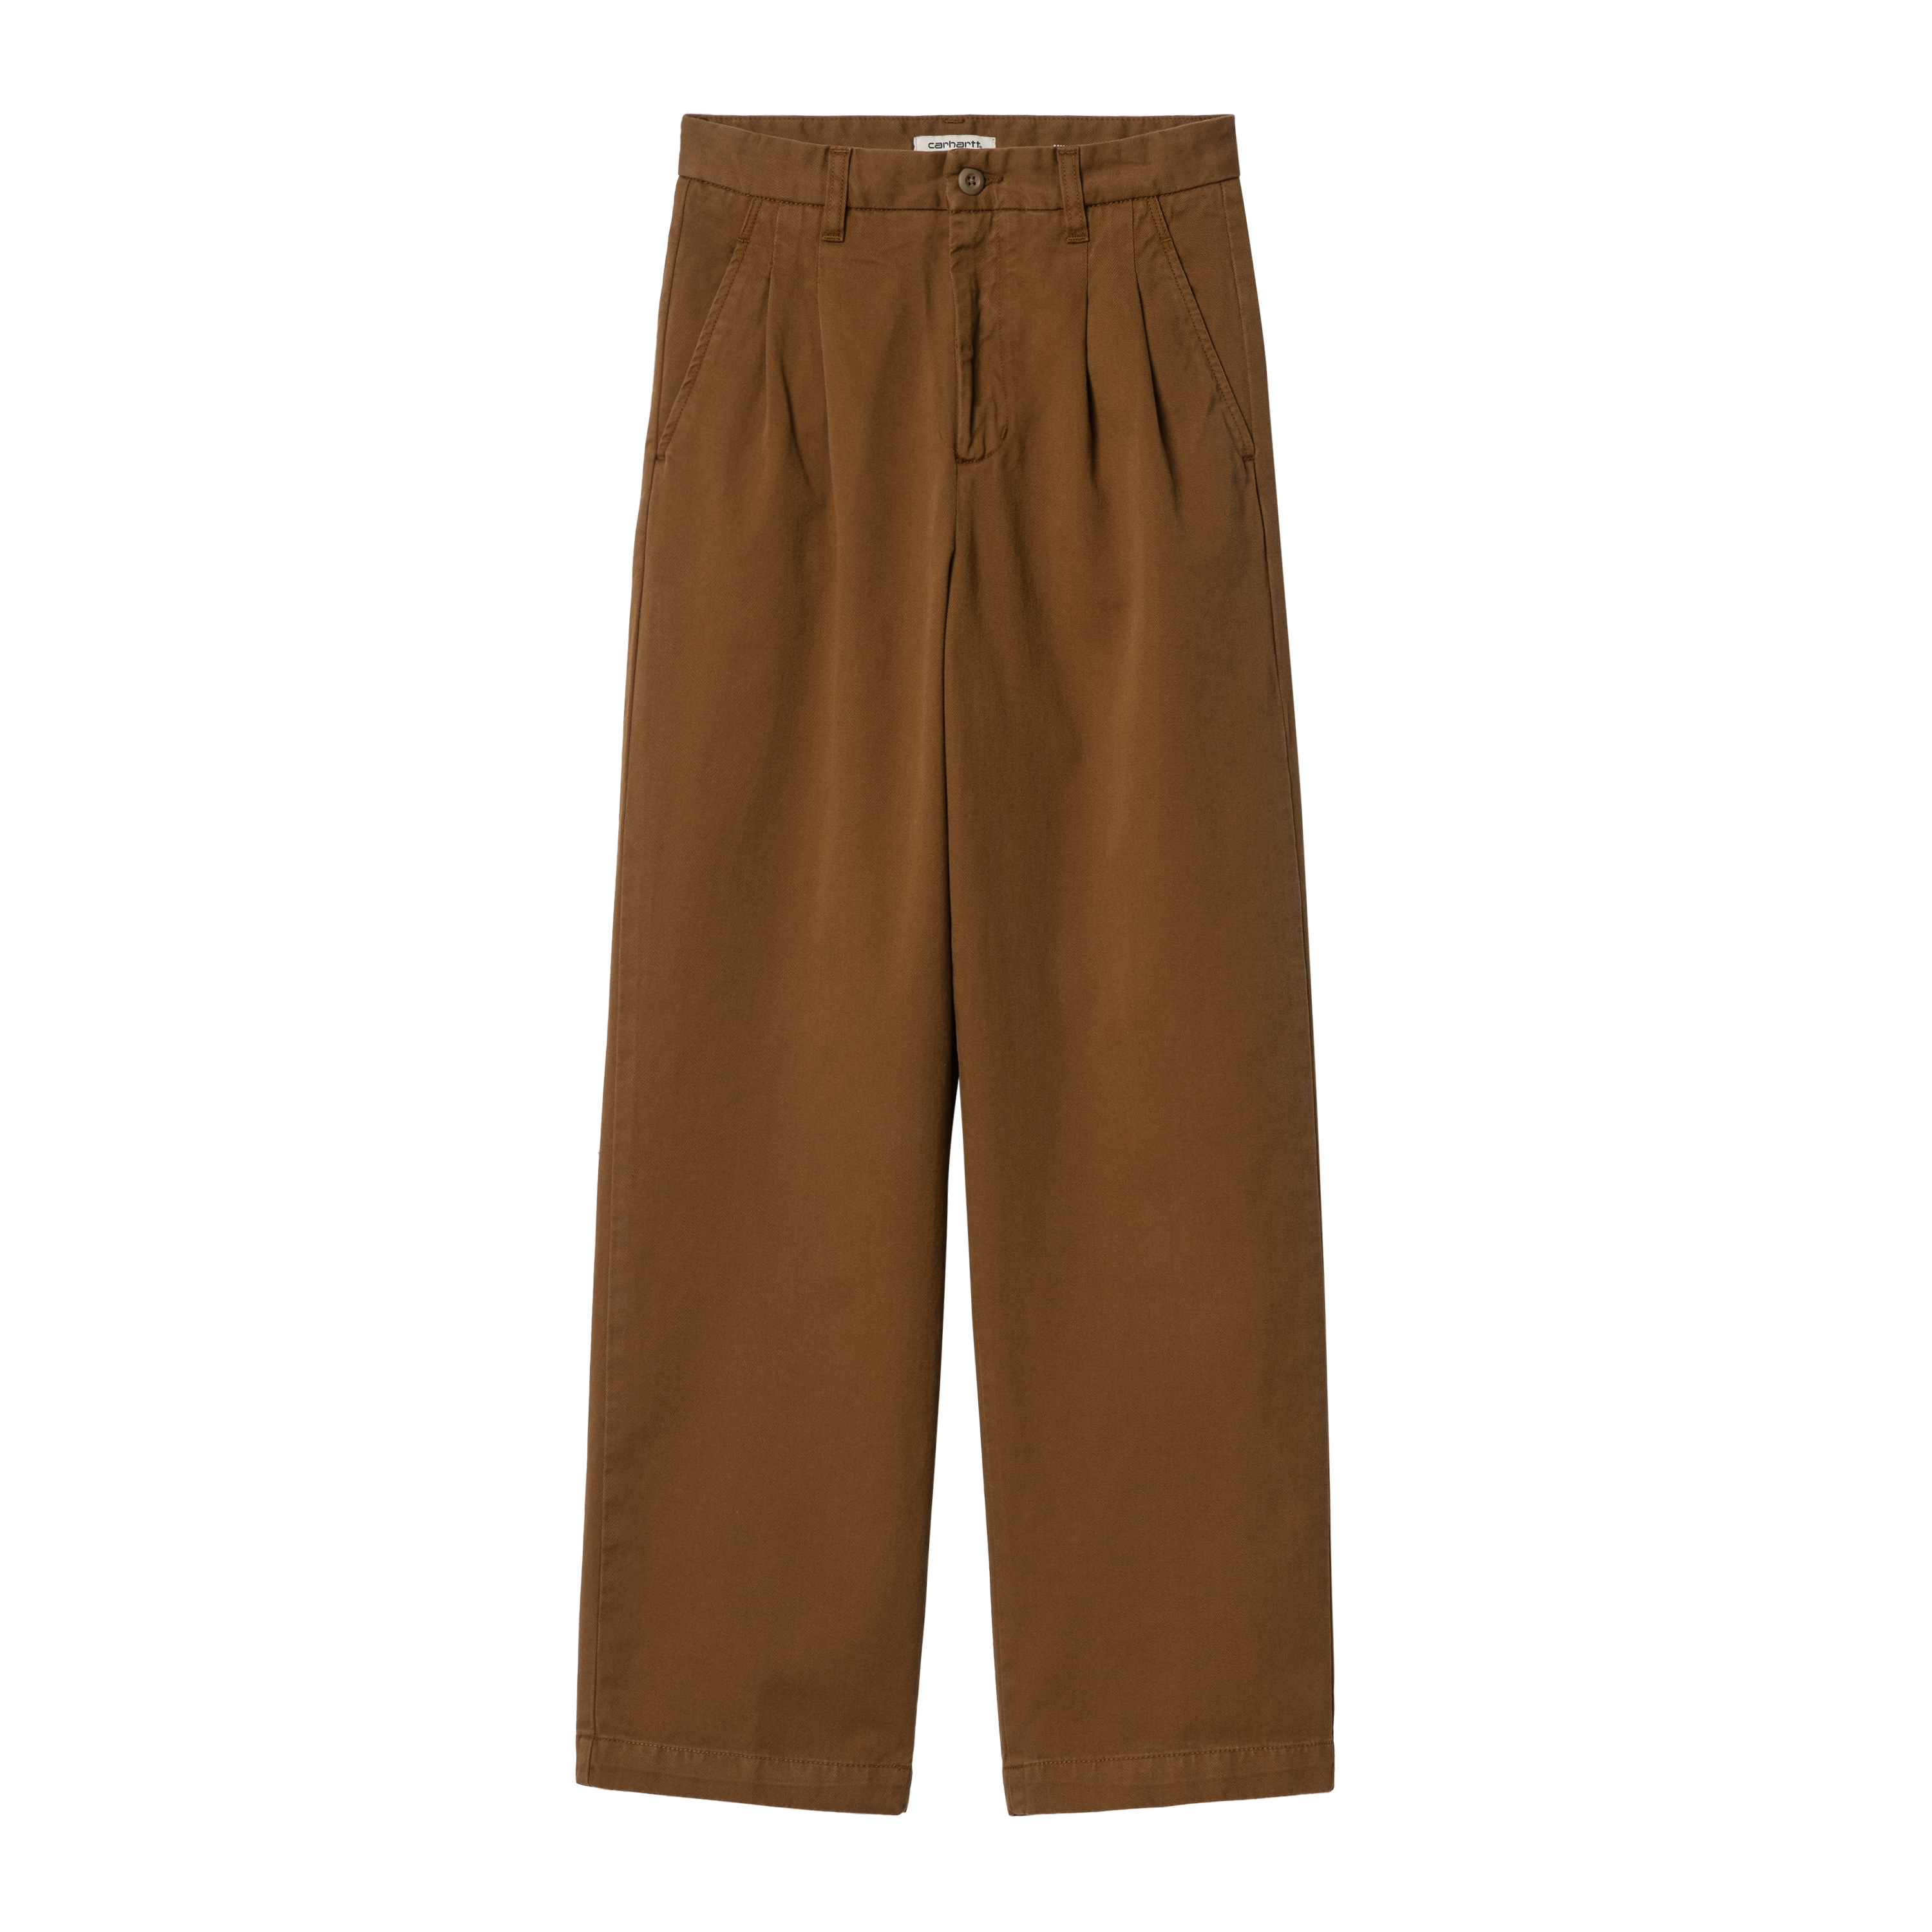 Carhartt WIP - W' CARA PANT - Deep hamilton brown (garment dyed)  